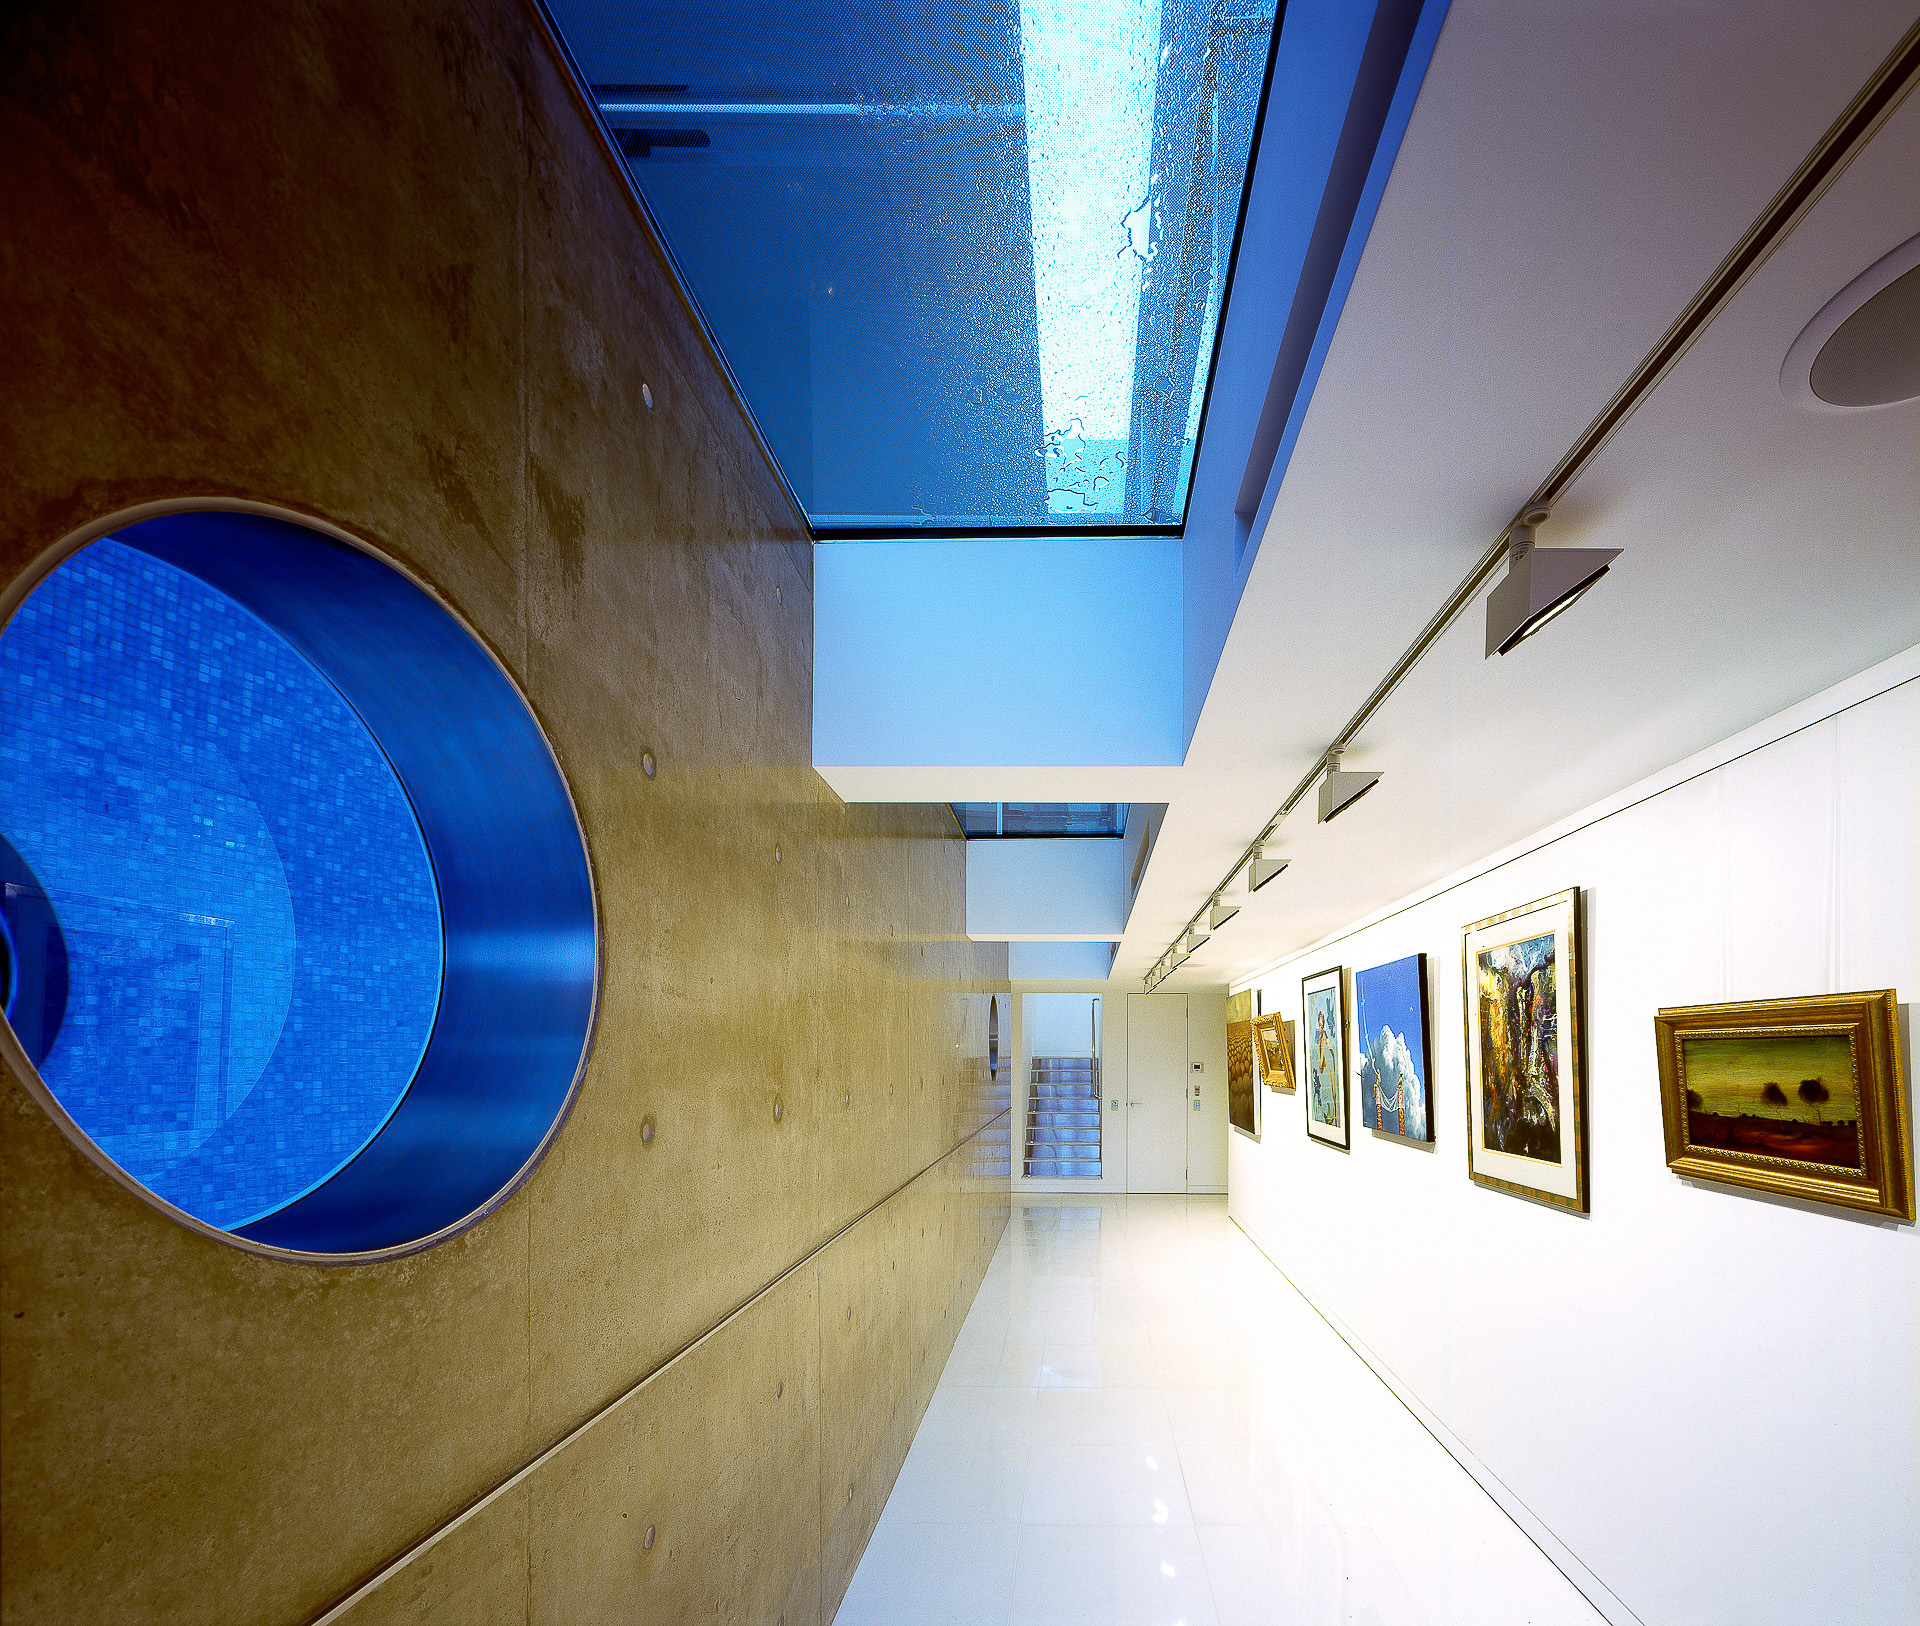 art room, art show, minimal, polished concrete walls, port hole, futuristic, minka joinery